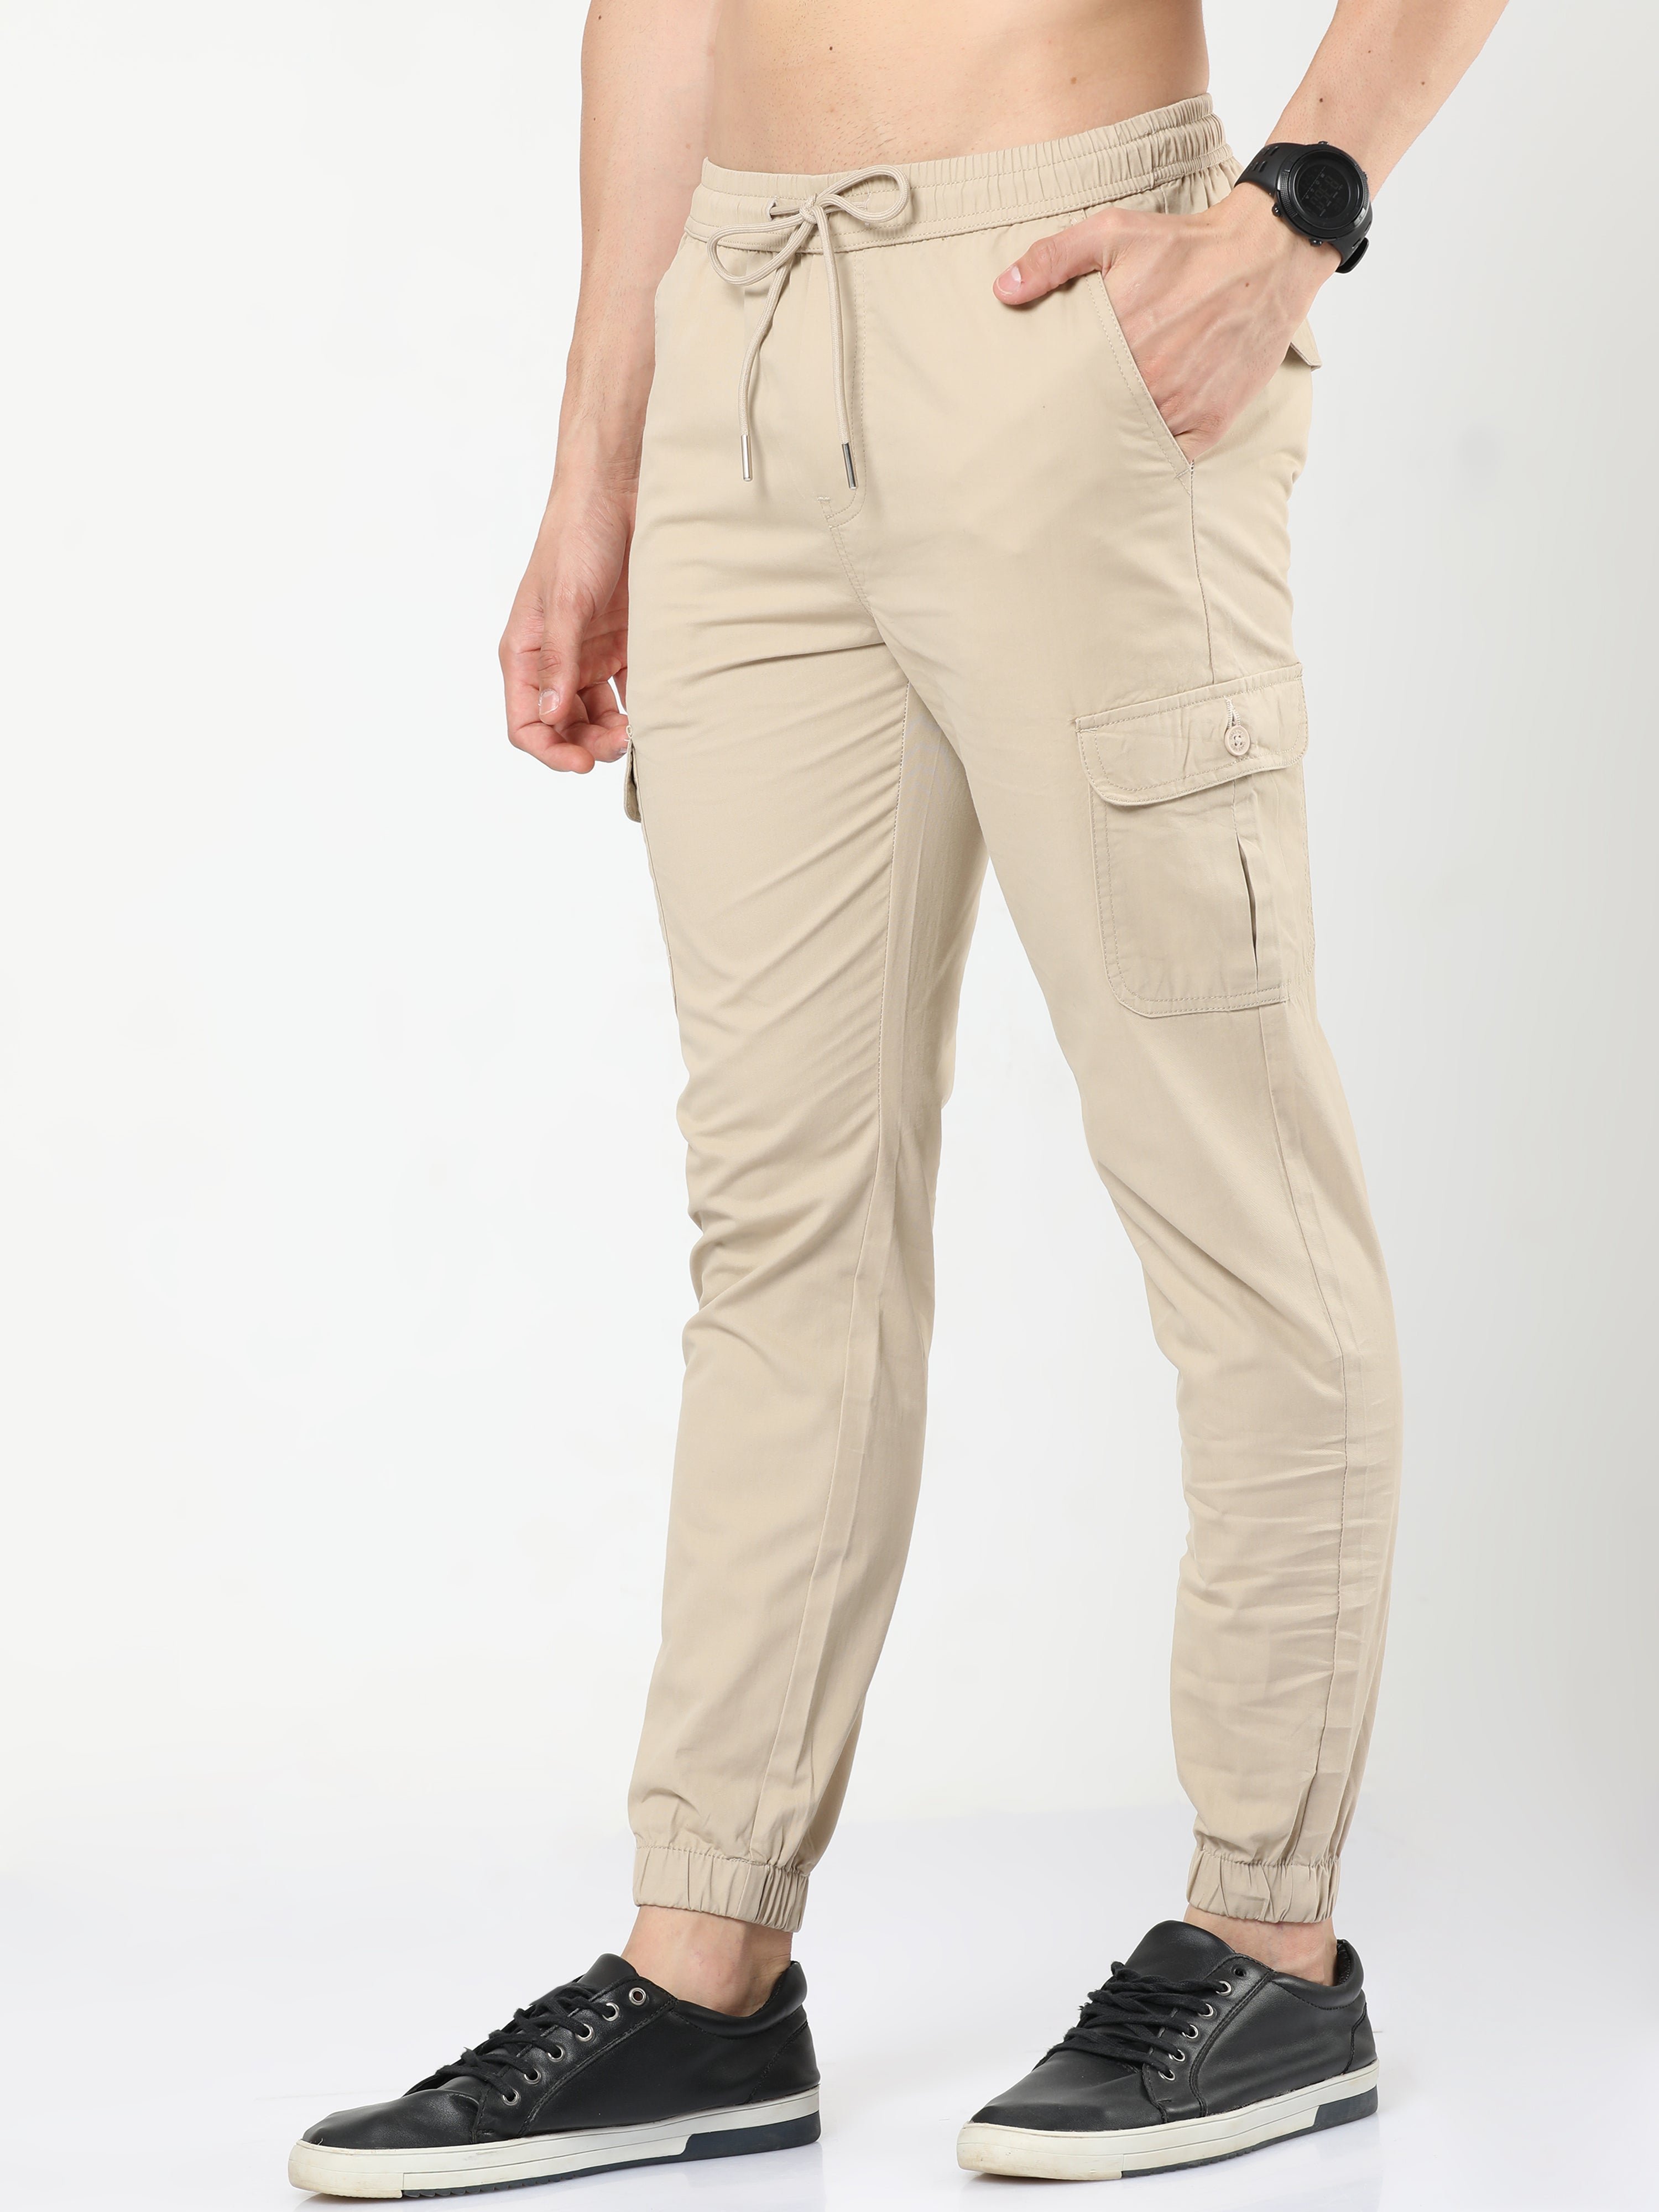 Buy Endless Enterprise Men's Slim Fit Lycra Blend Casual Trousers (Orange)  Size:-36 at Amazon.in